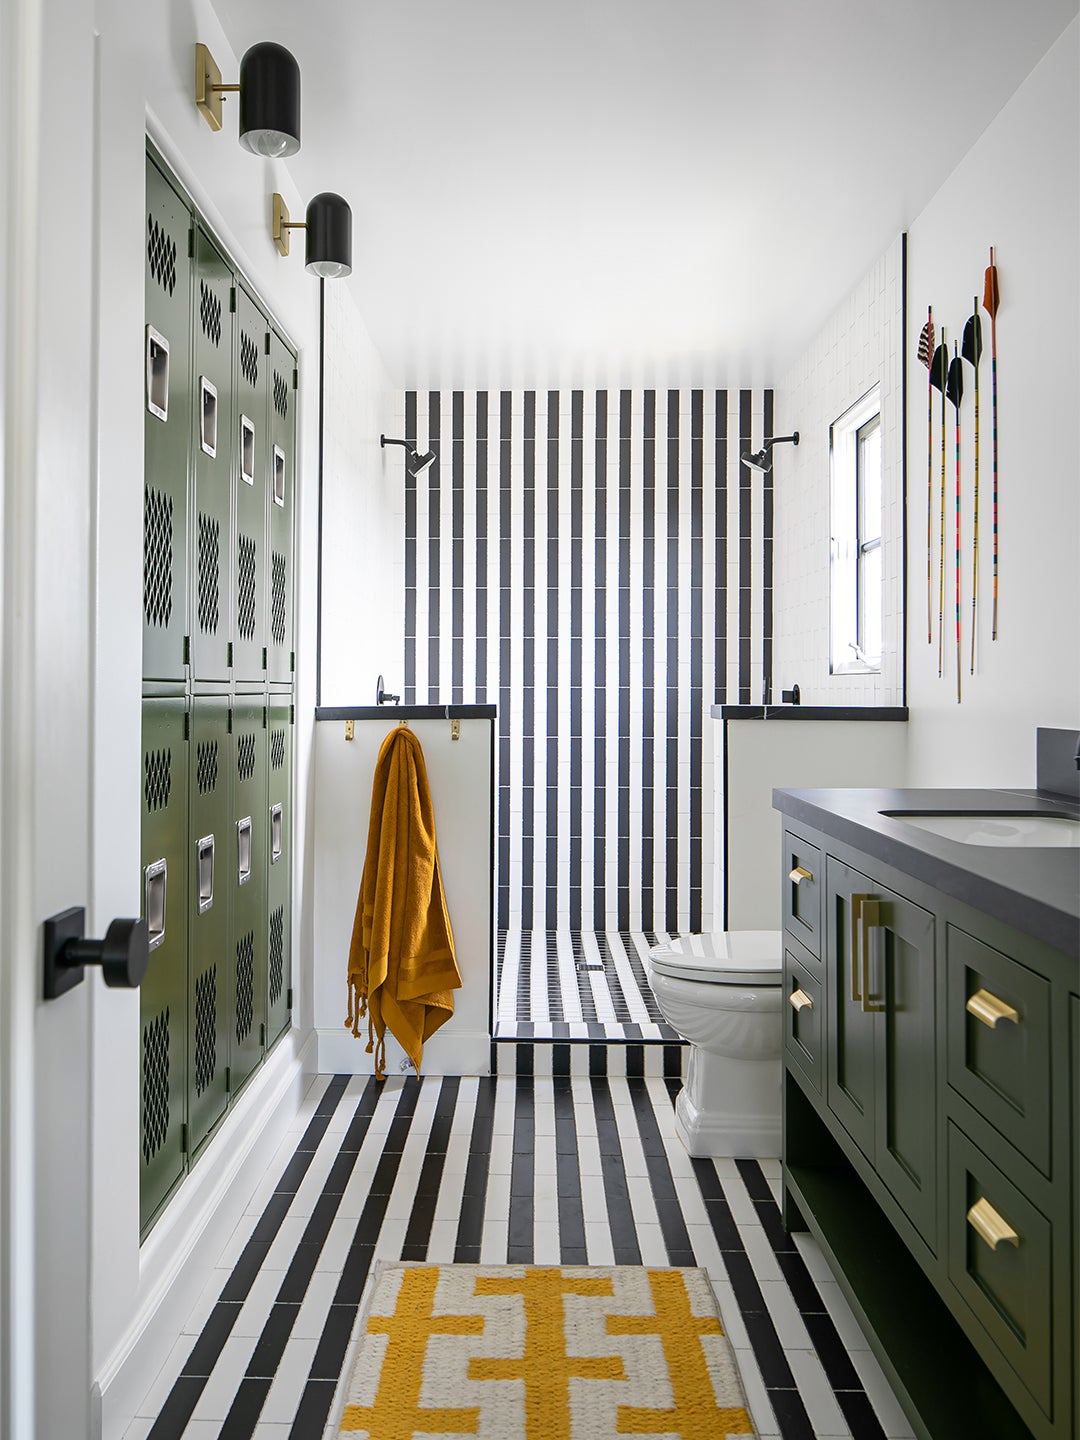 striped bathroom tile